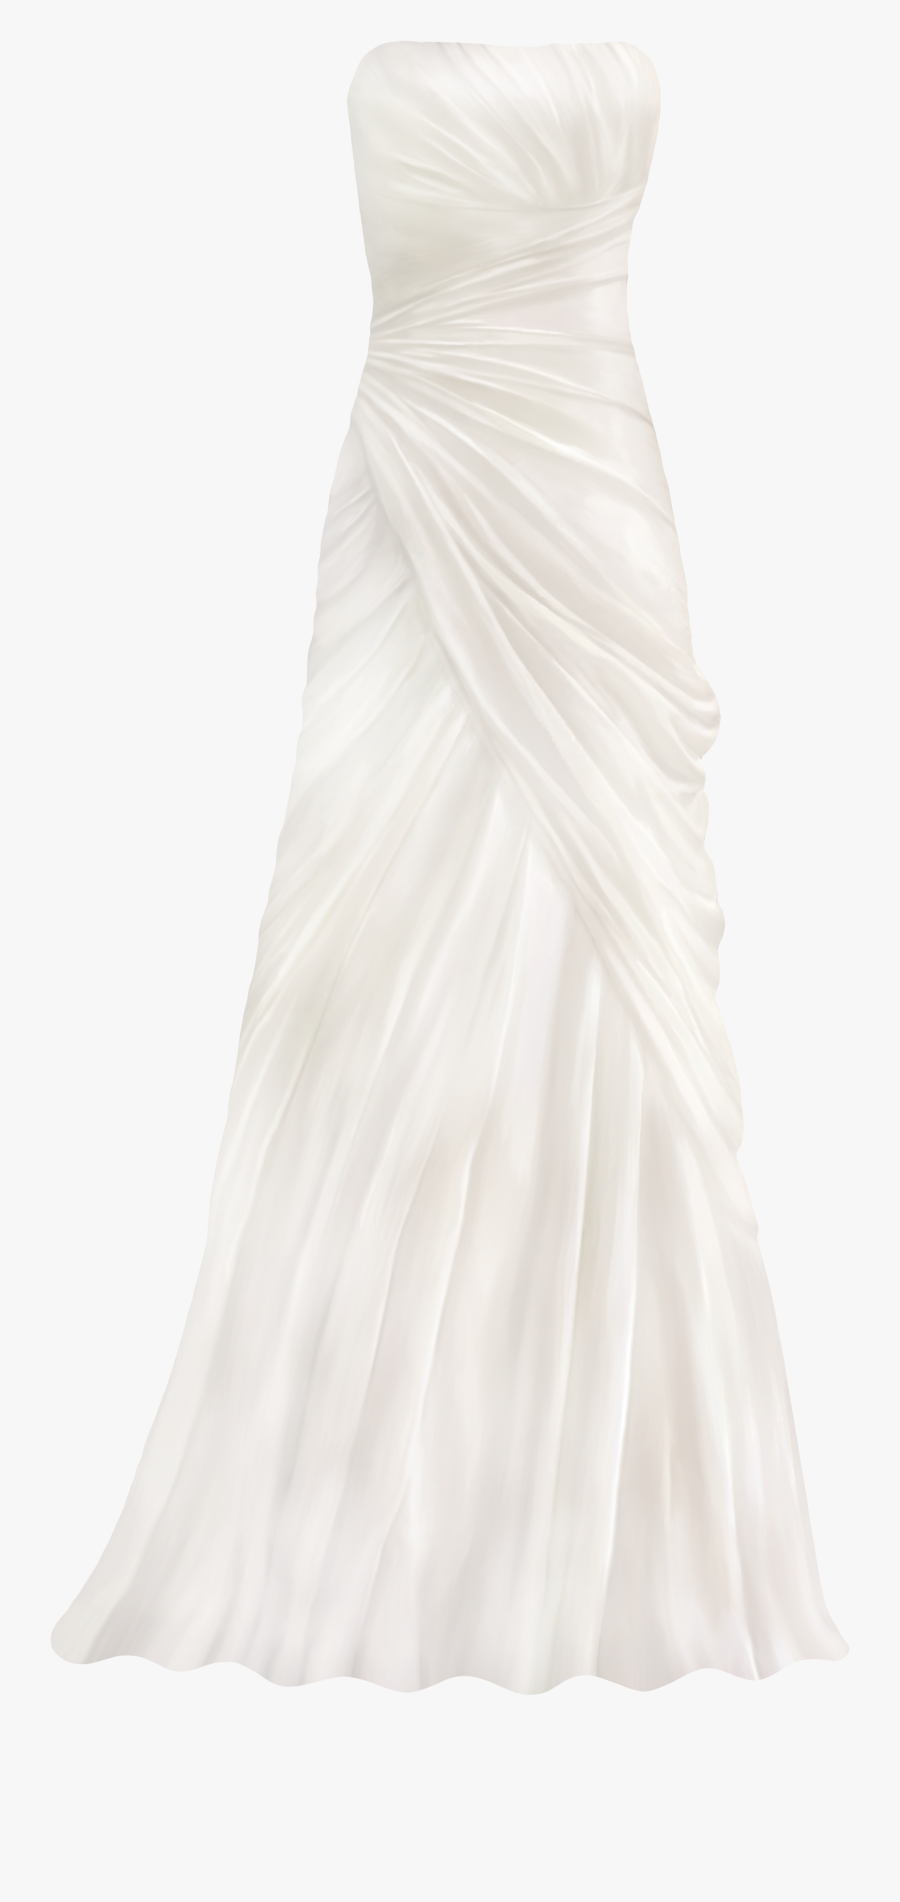 Wedding Dress Png Clip Art - Gown, Transparent Clipart